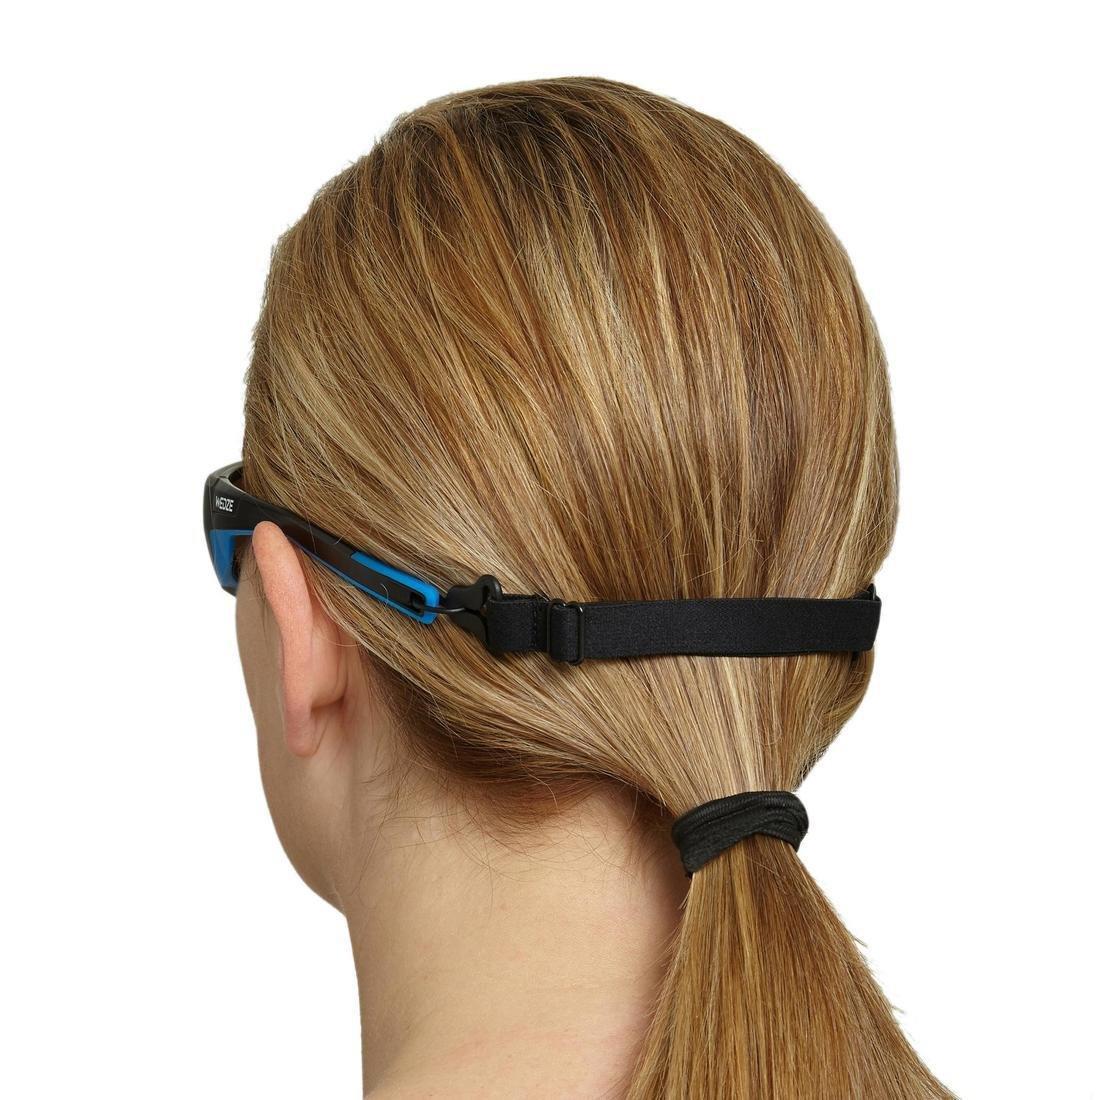 QUECHUA - Stretchy Support Headband, Black